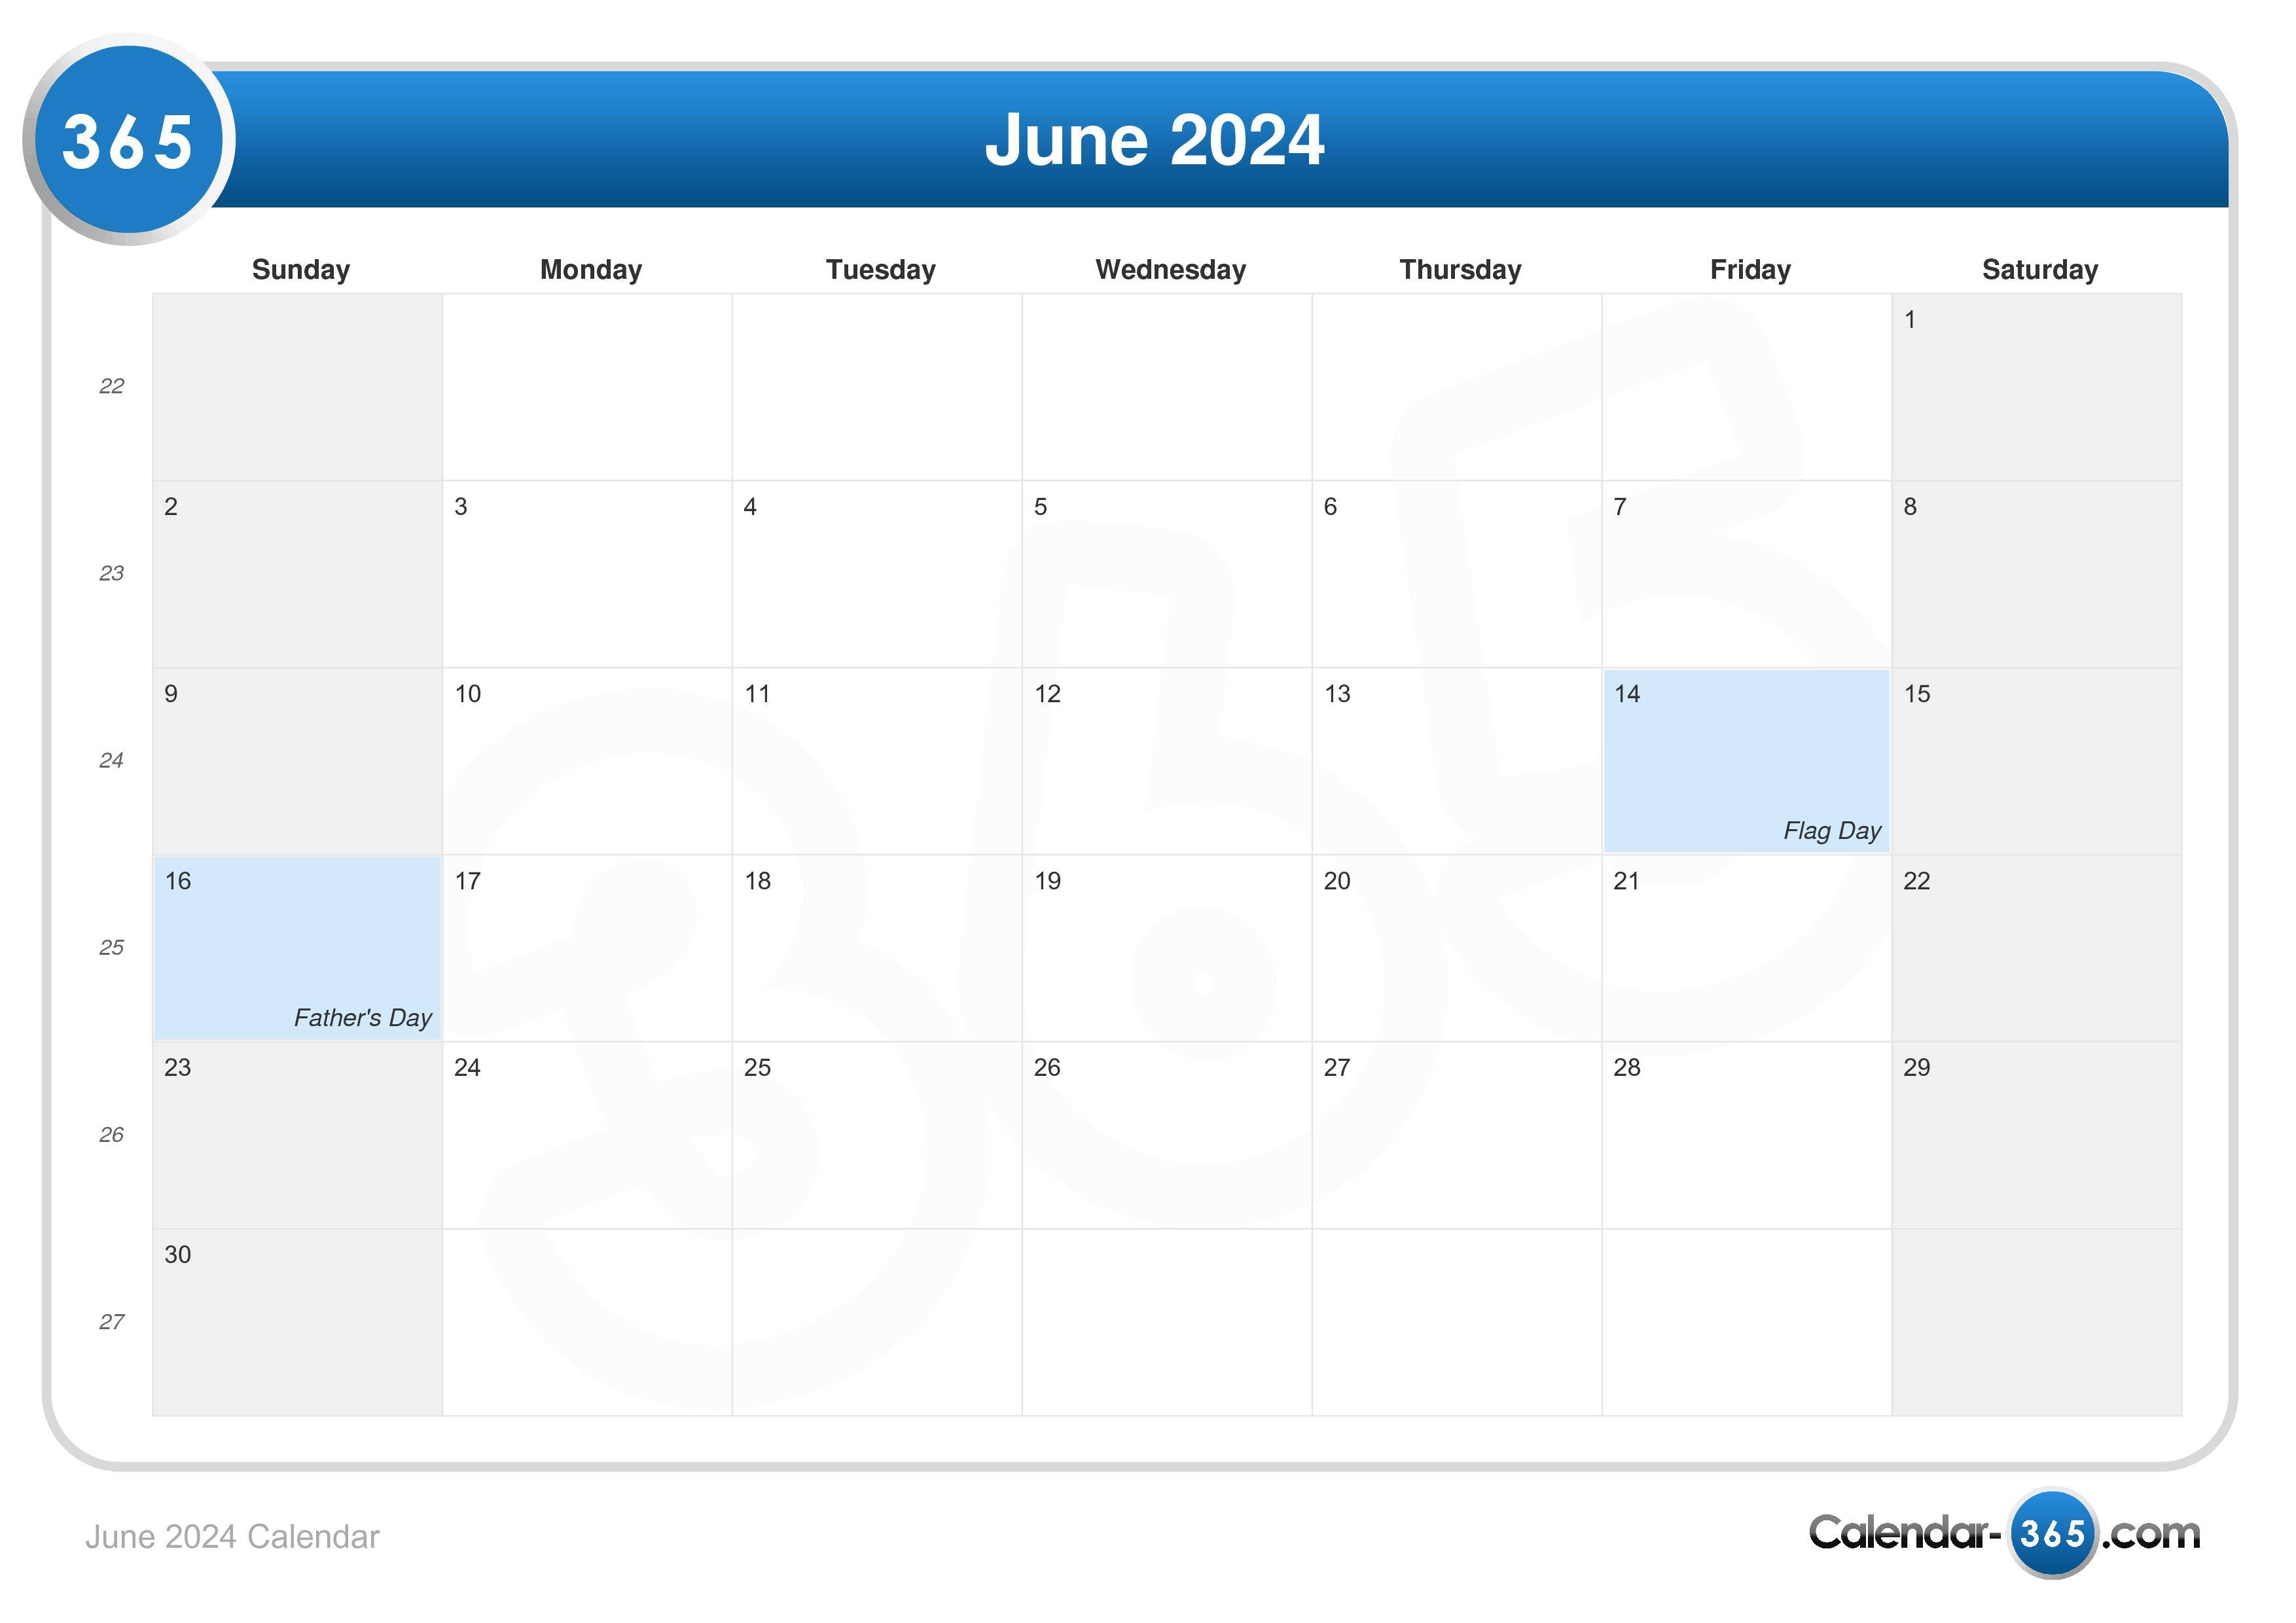 June 2024 Calendar Printable Wiki Calendar Easy to Use Calendar App 2024